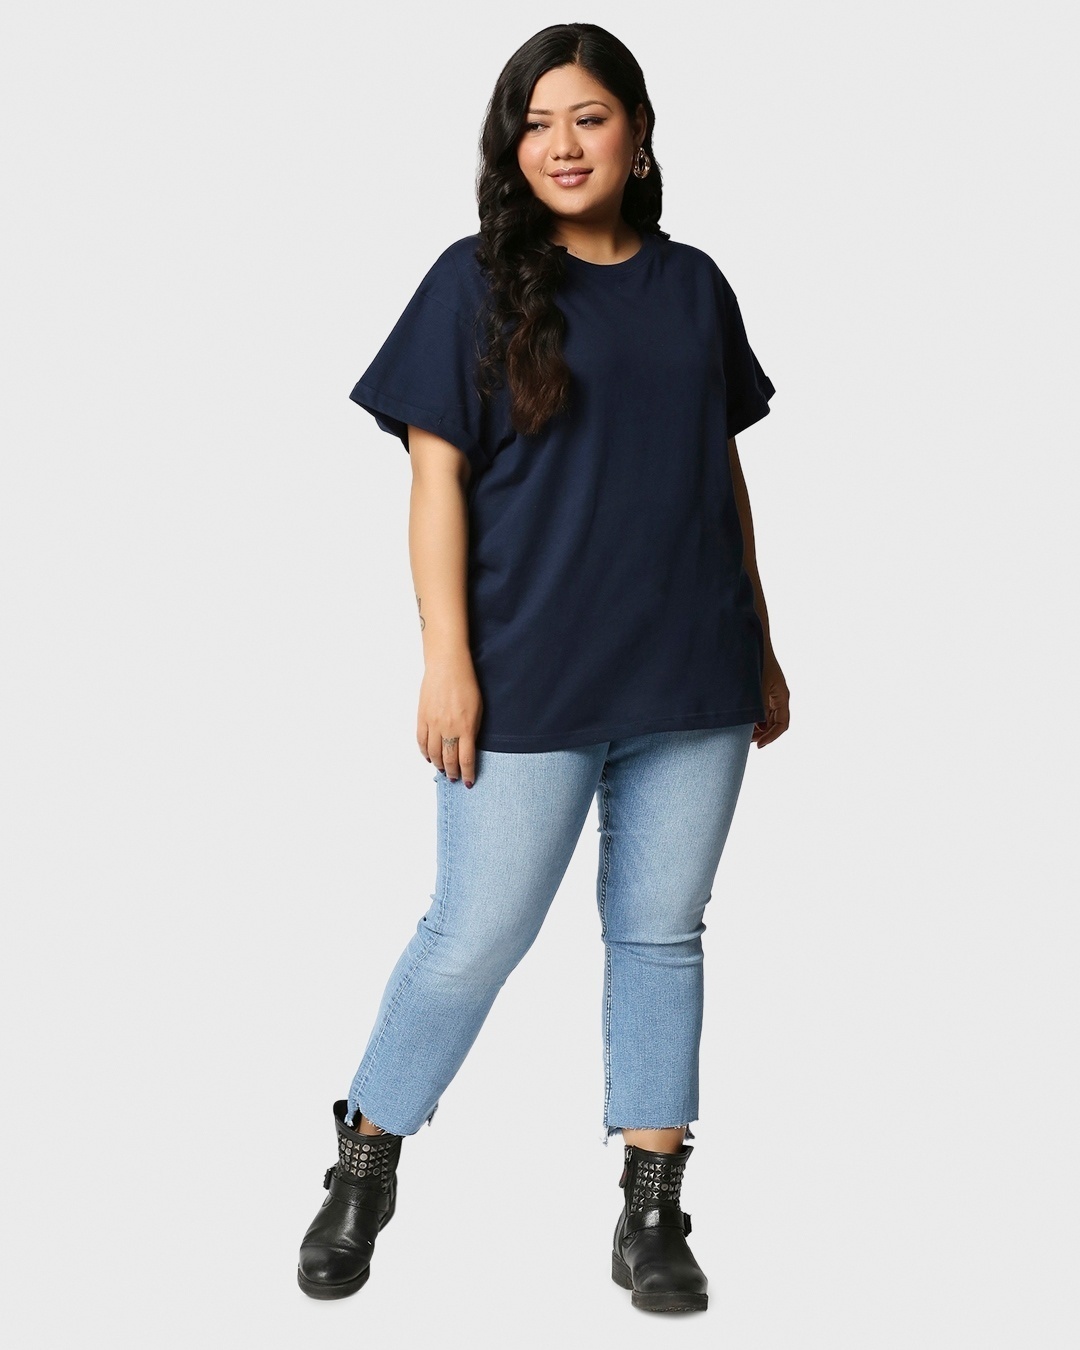 Shop Women's Blue & White Plus Size Boyfriend T-shirt (Pack of 2)